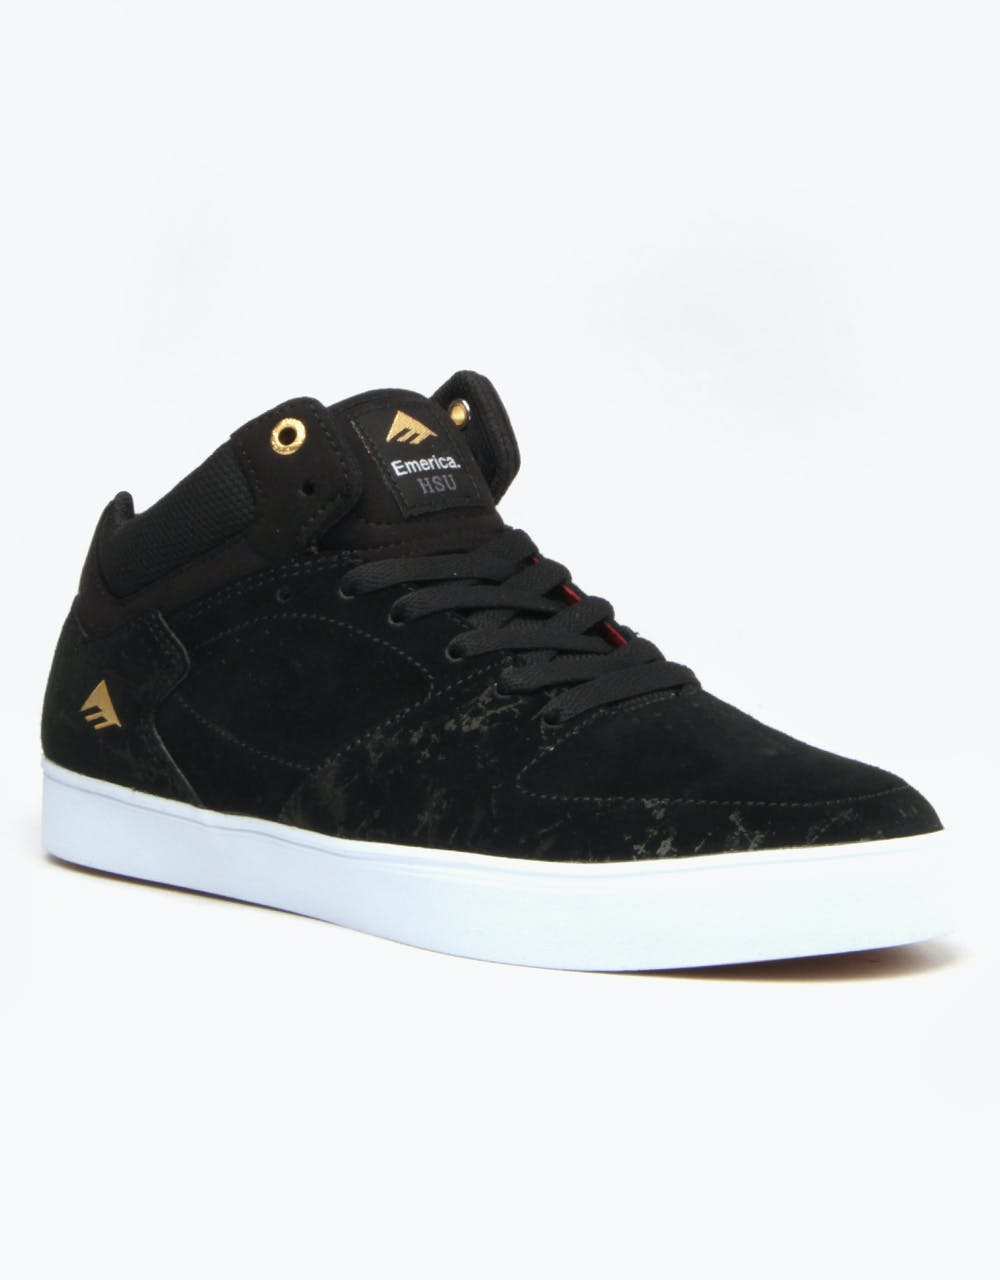 Emerica The Hsu G6 Skate Shoes - Black/White